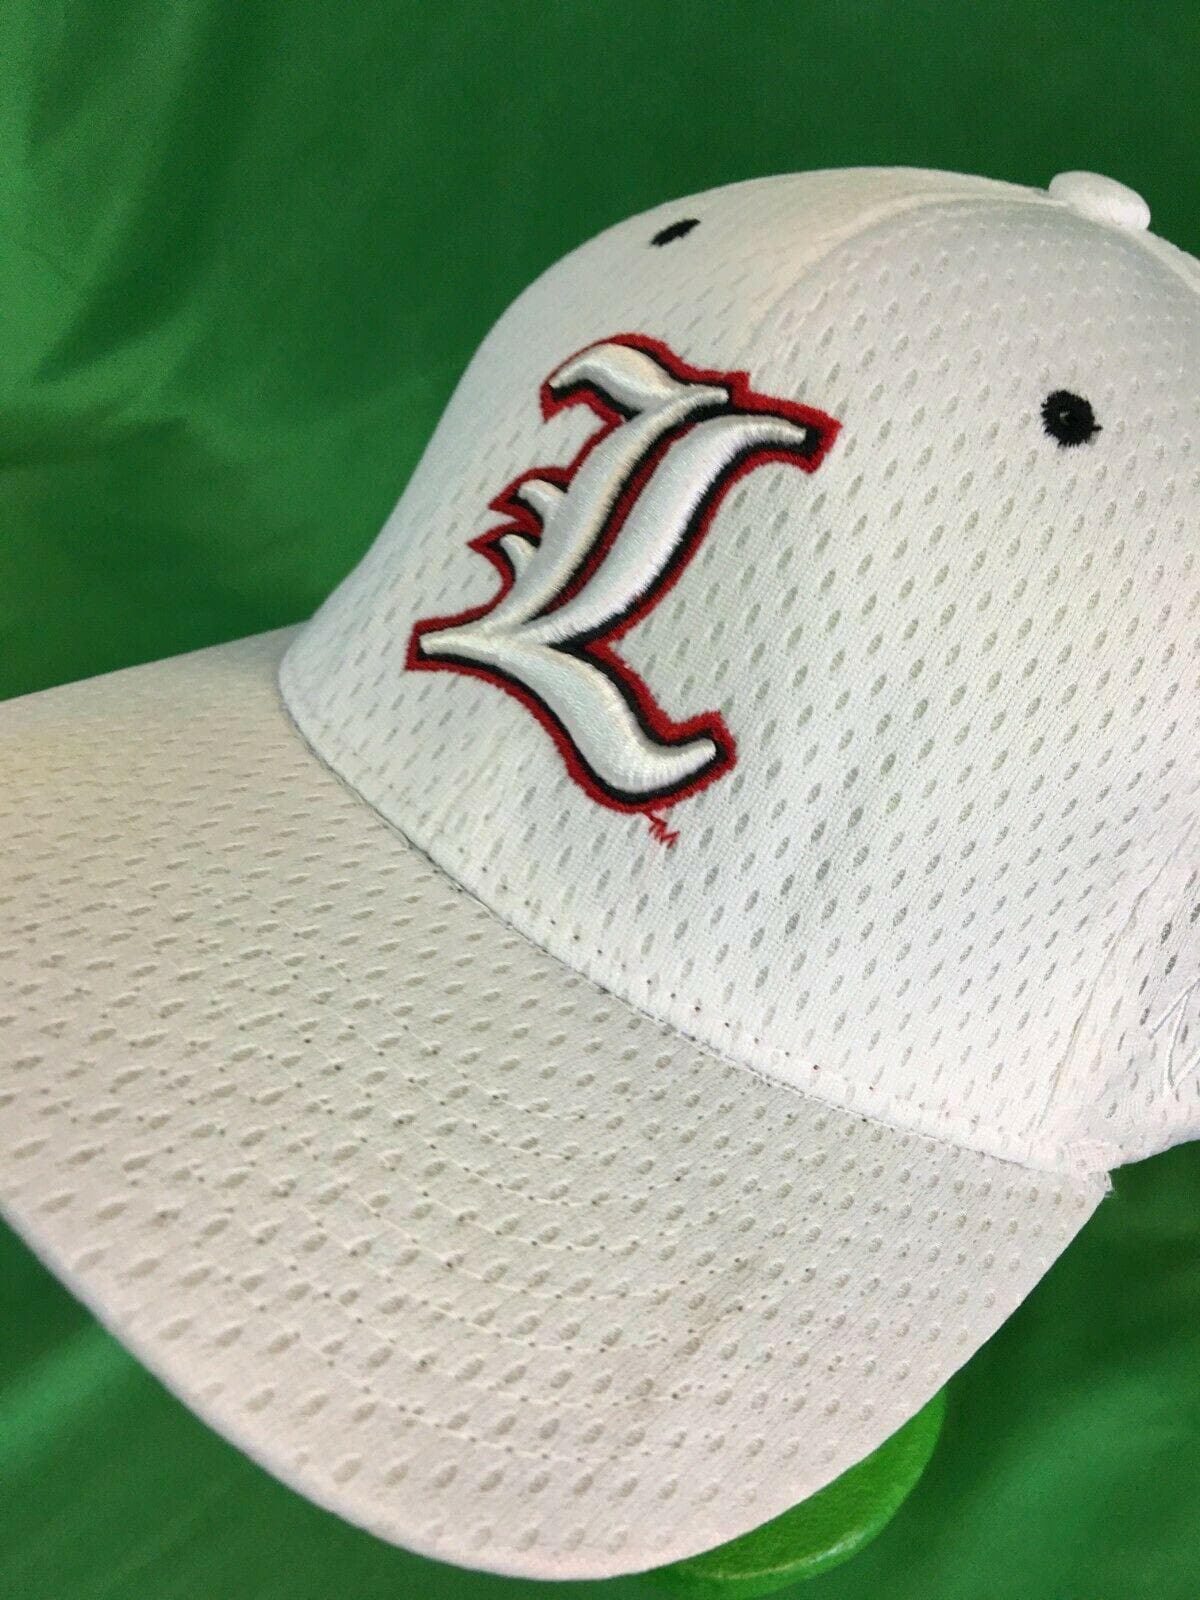 NCAA Louisville Cardinals Zephyr White Hat/Cap Medium/Large NWT